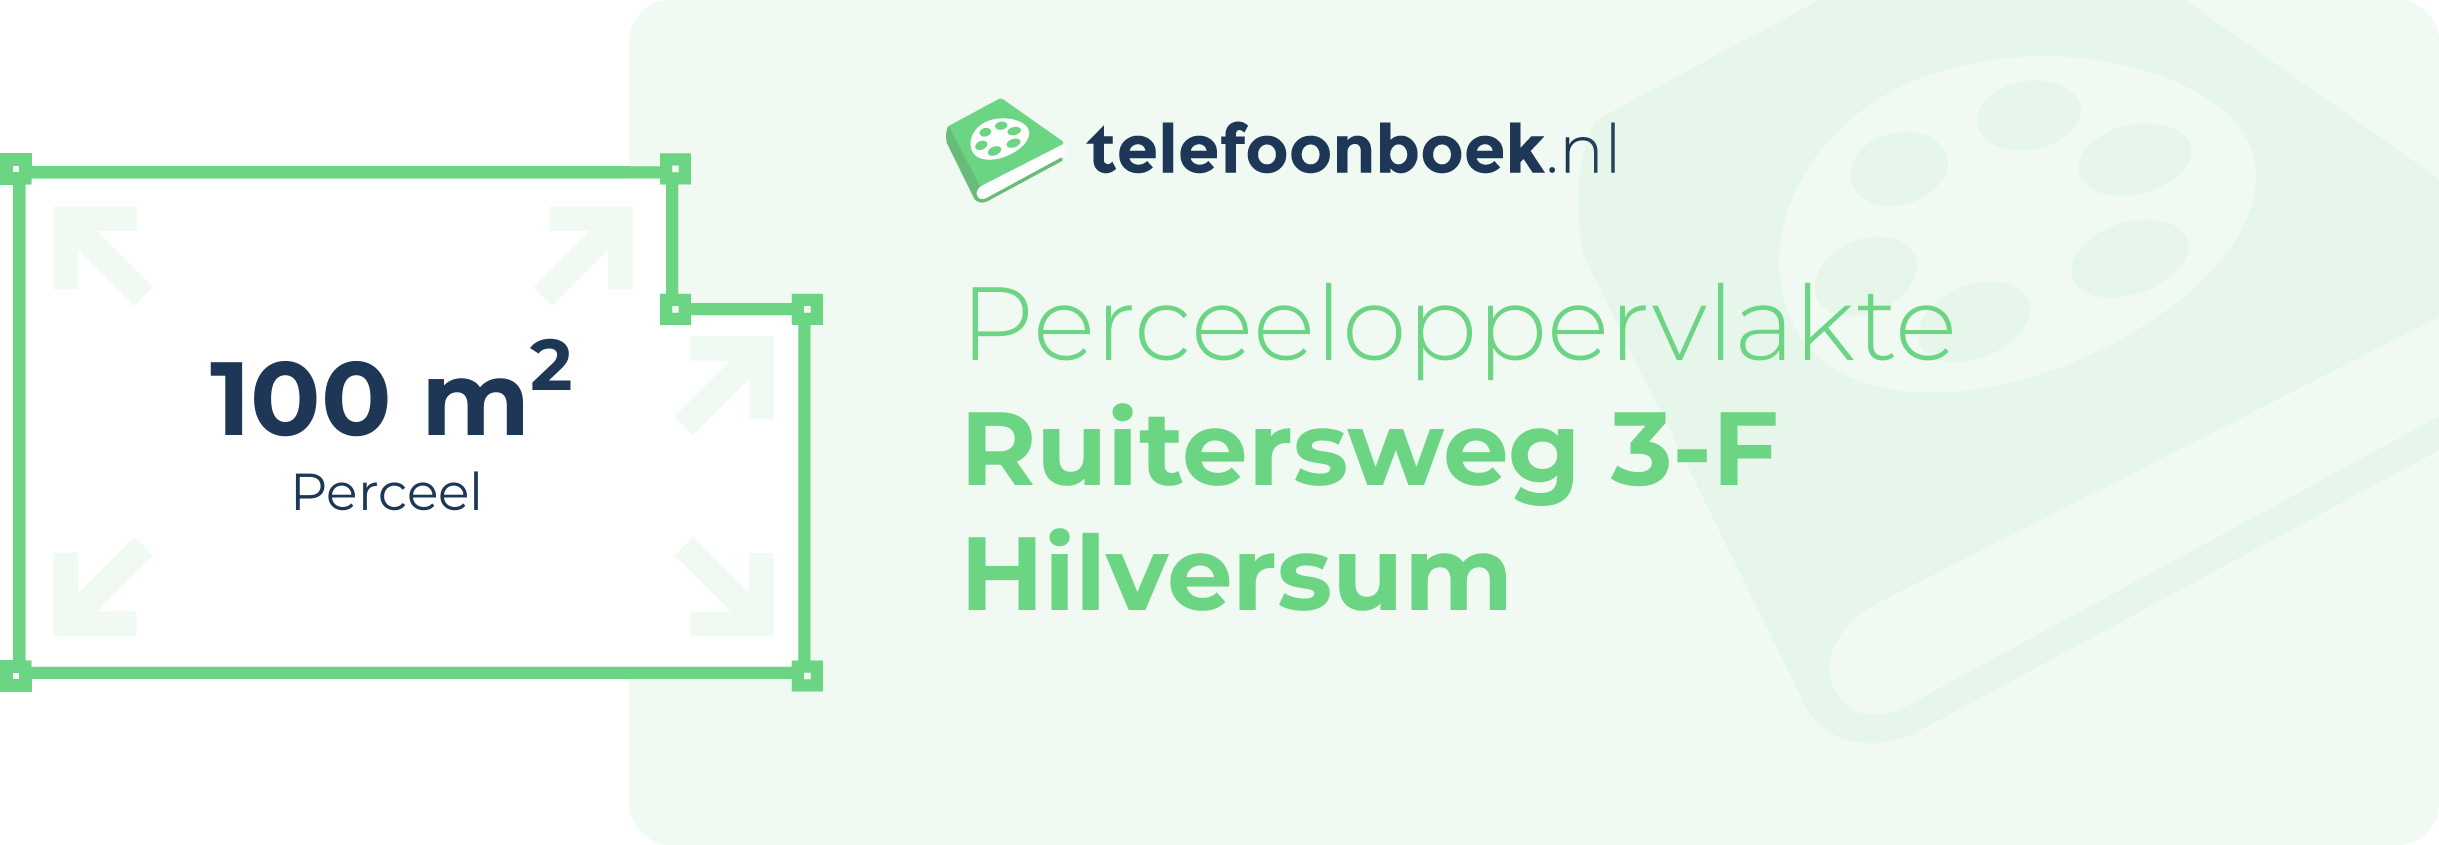 Perceeloppervlakte Ruitersweg 3-F Hilversum